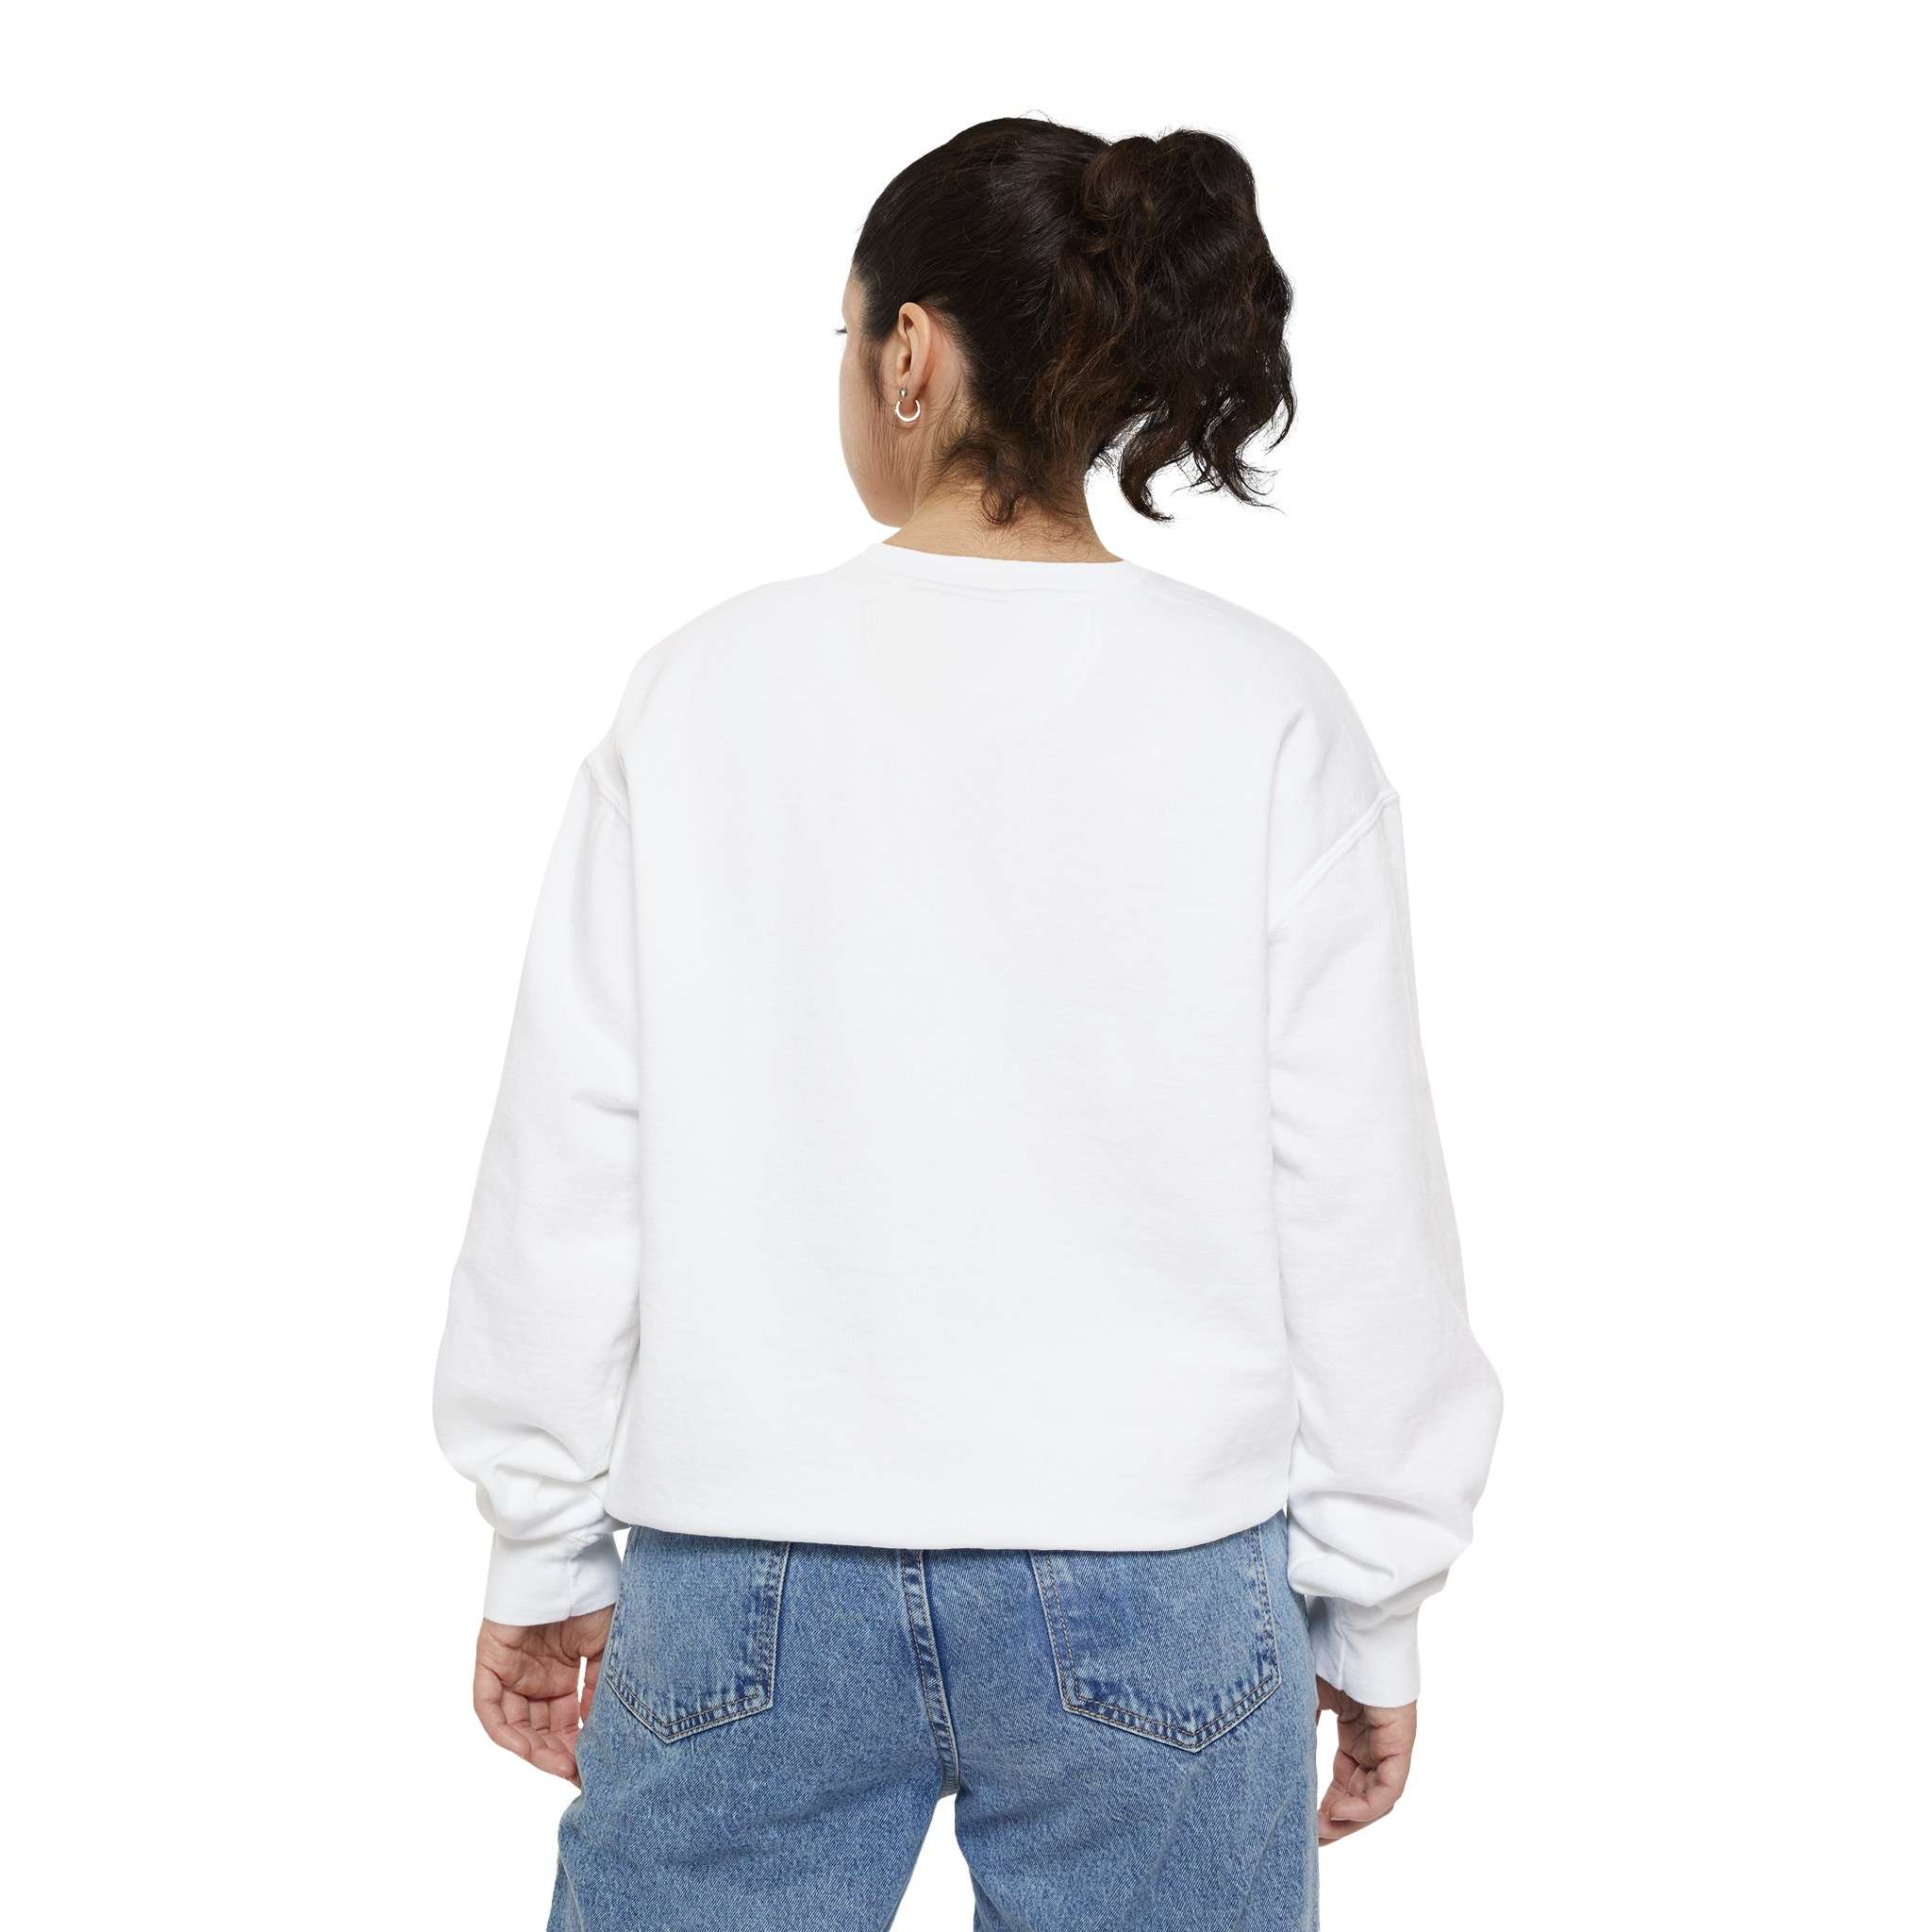 Makima Character Inspired Unisex Garment-Dyed Sweatshirt